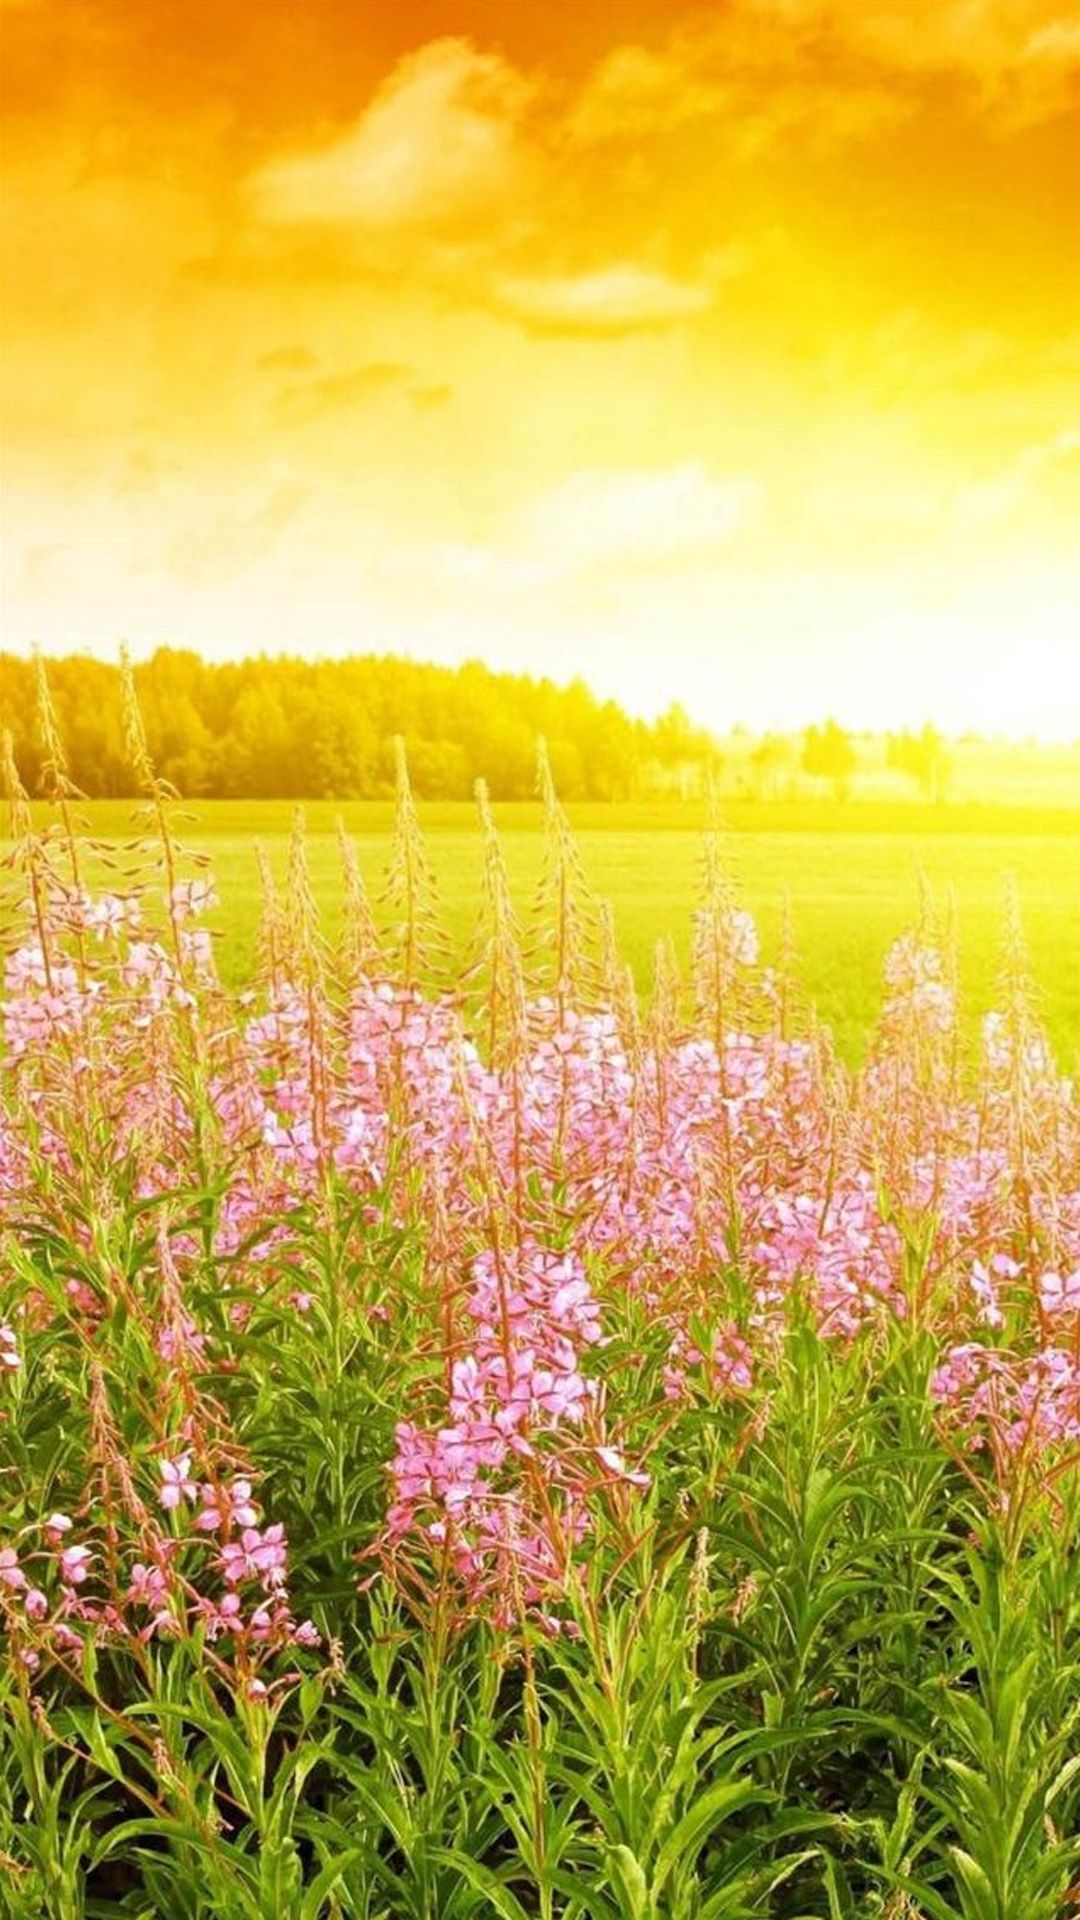 Brilliant Golden Sunshine Spring Flower Bloom Fiel IPhone 6 6S 7 Plus Wallpaper And IPhone 8 Plus Wallpaper